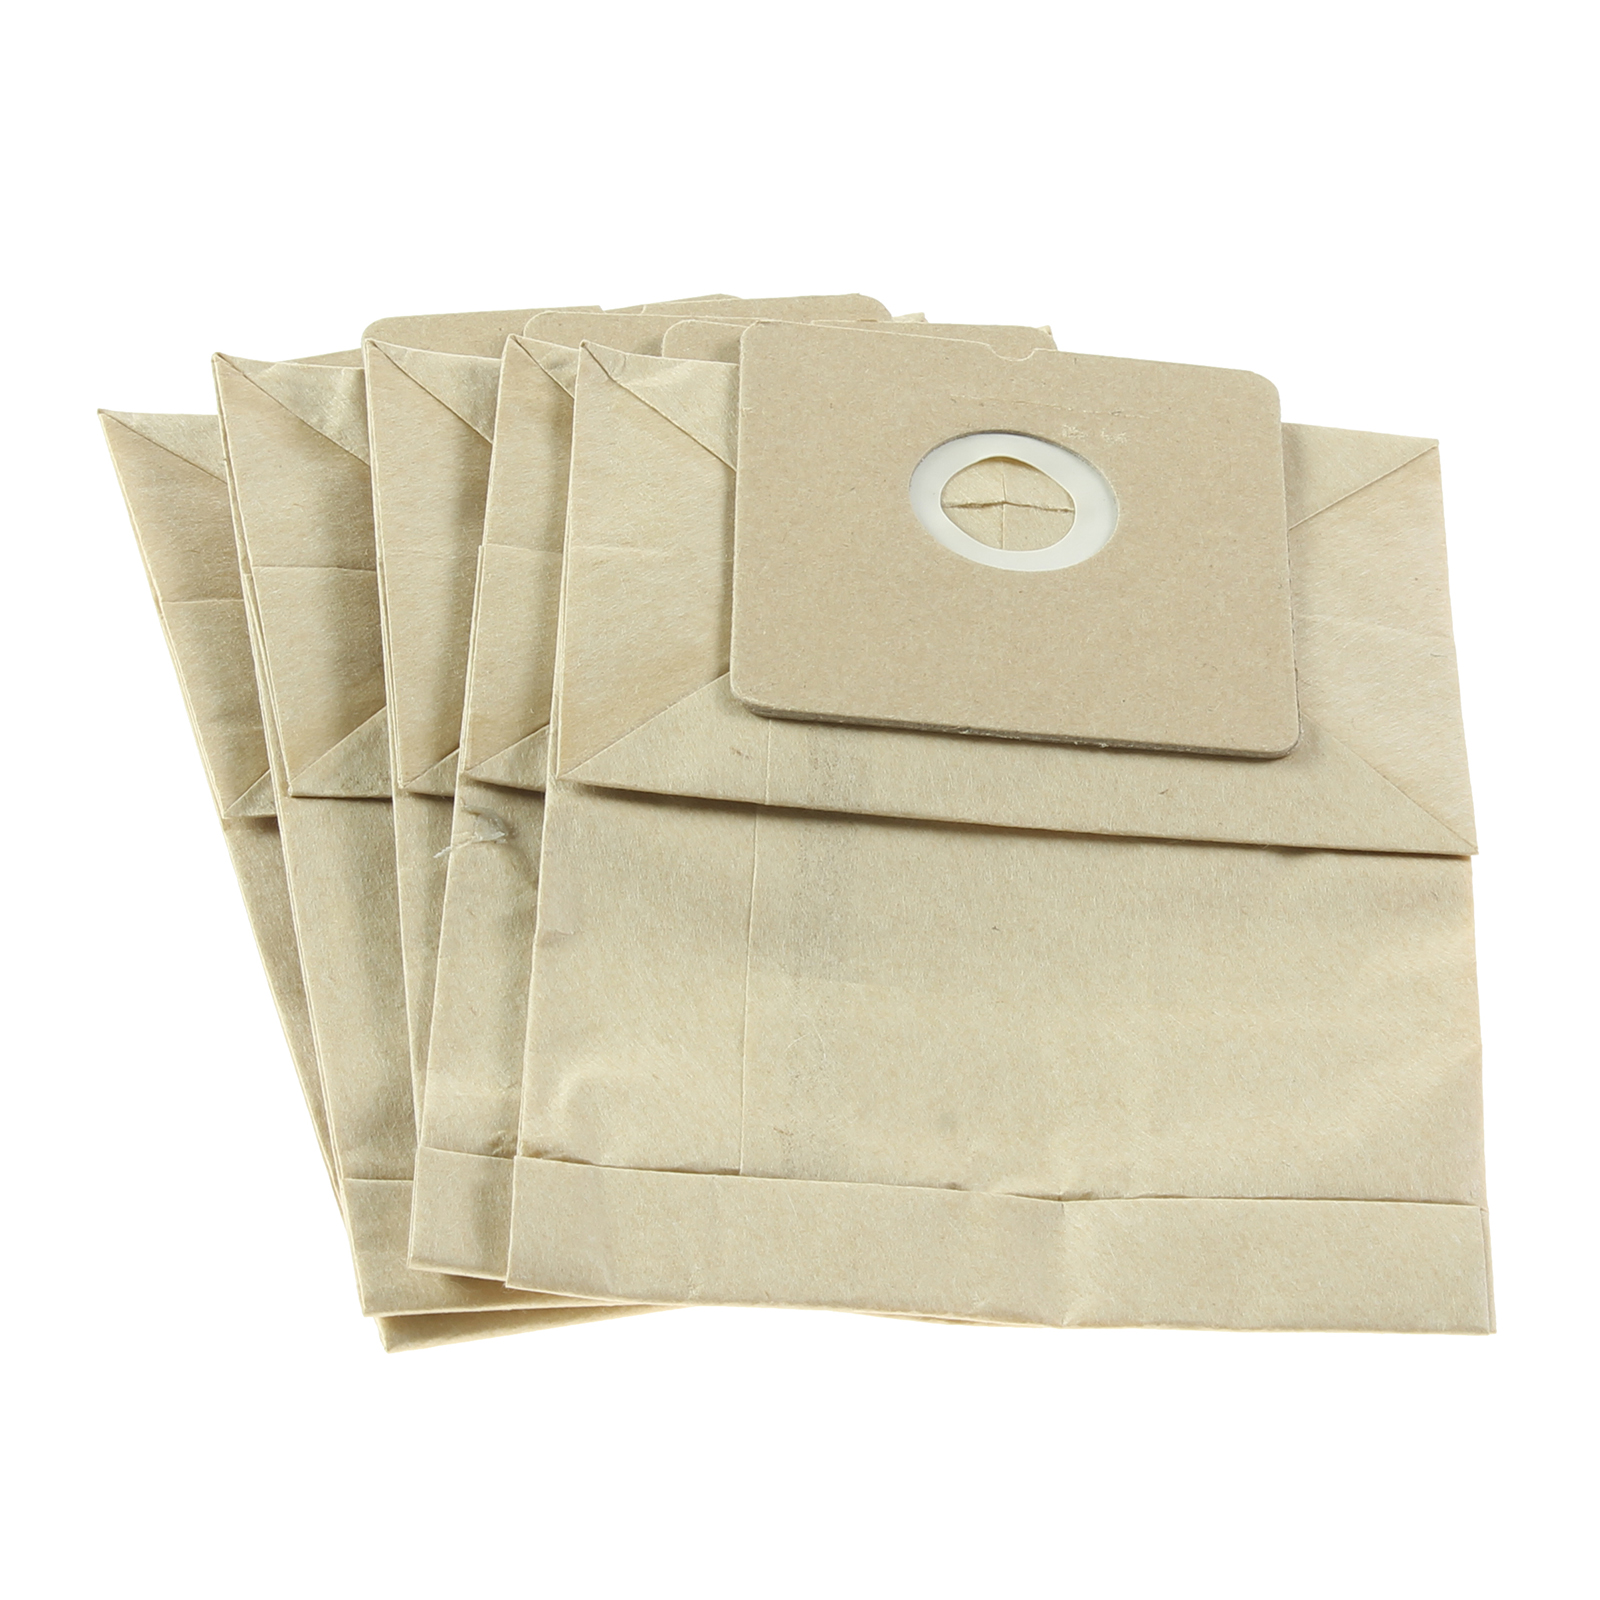 Morphy Richards Vacuum Cleaner Paper Bag (Pack of 5 bags + 2 filters) SDB227